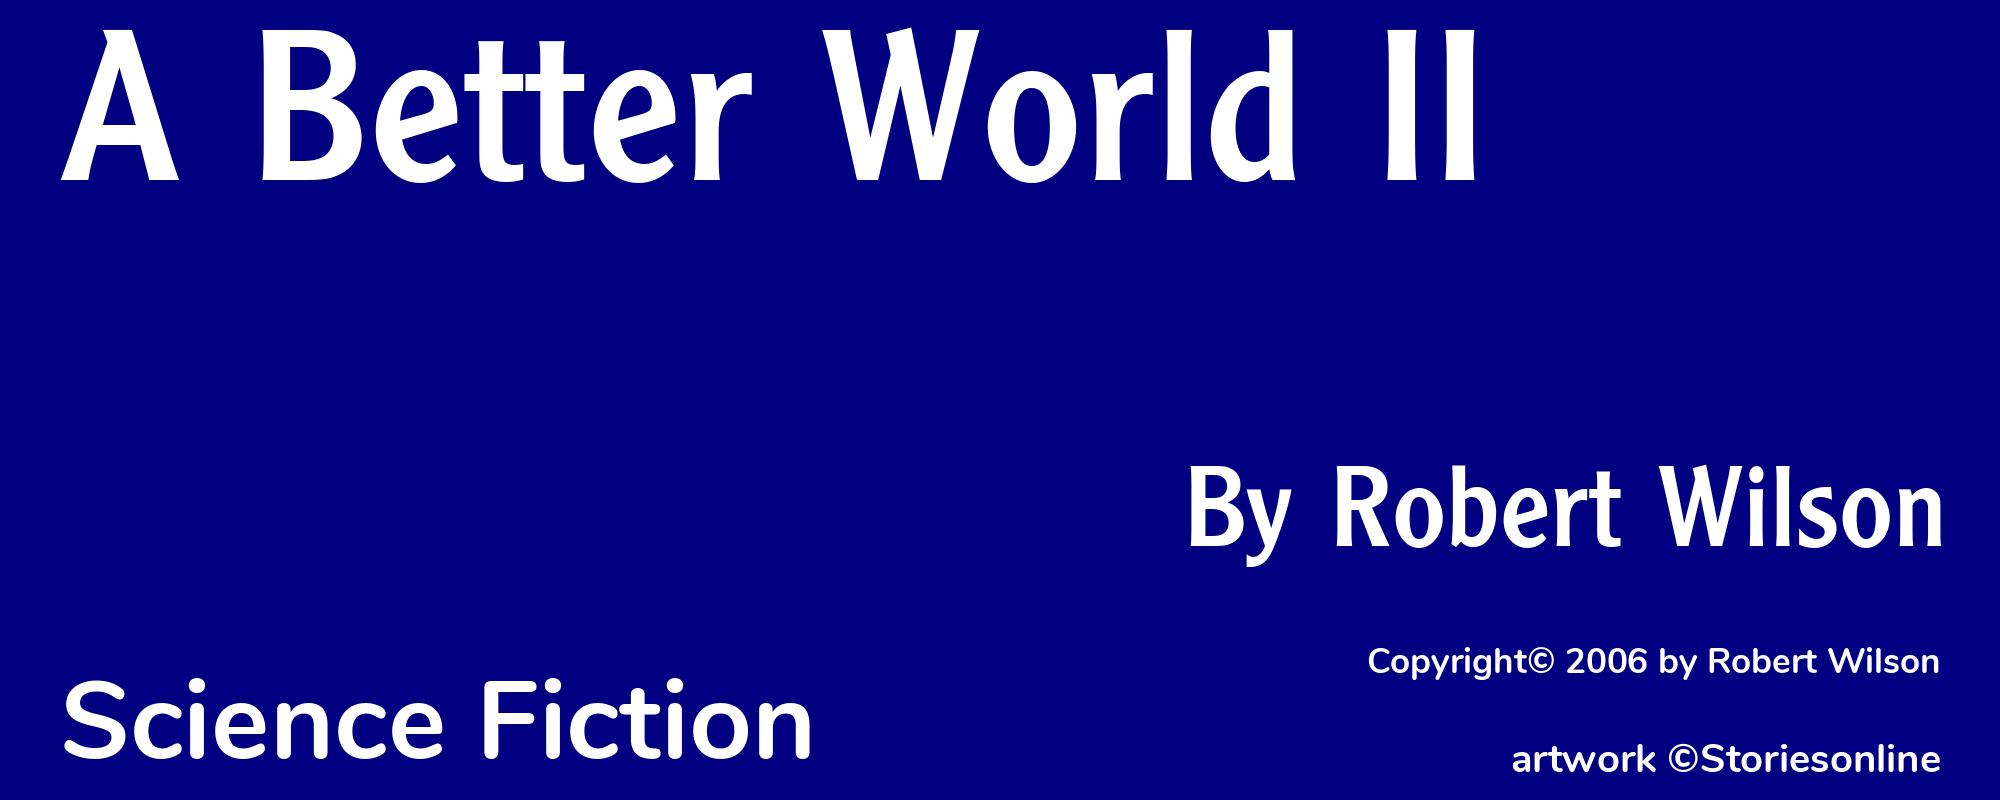 A Better World II - Cover